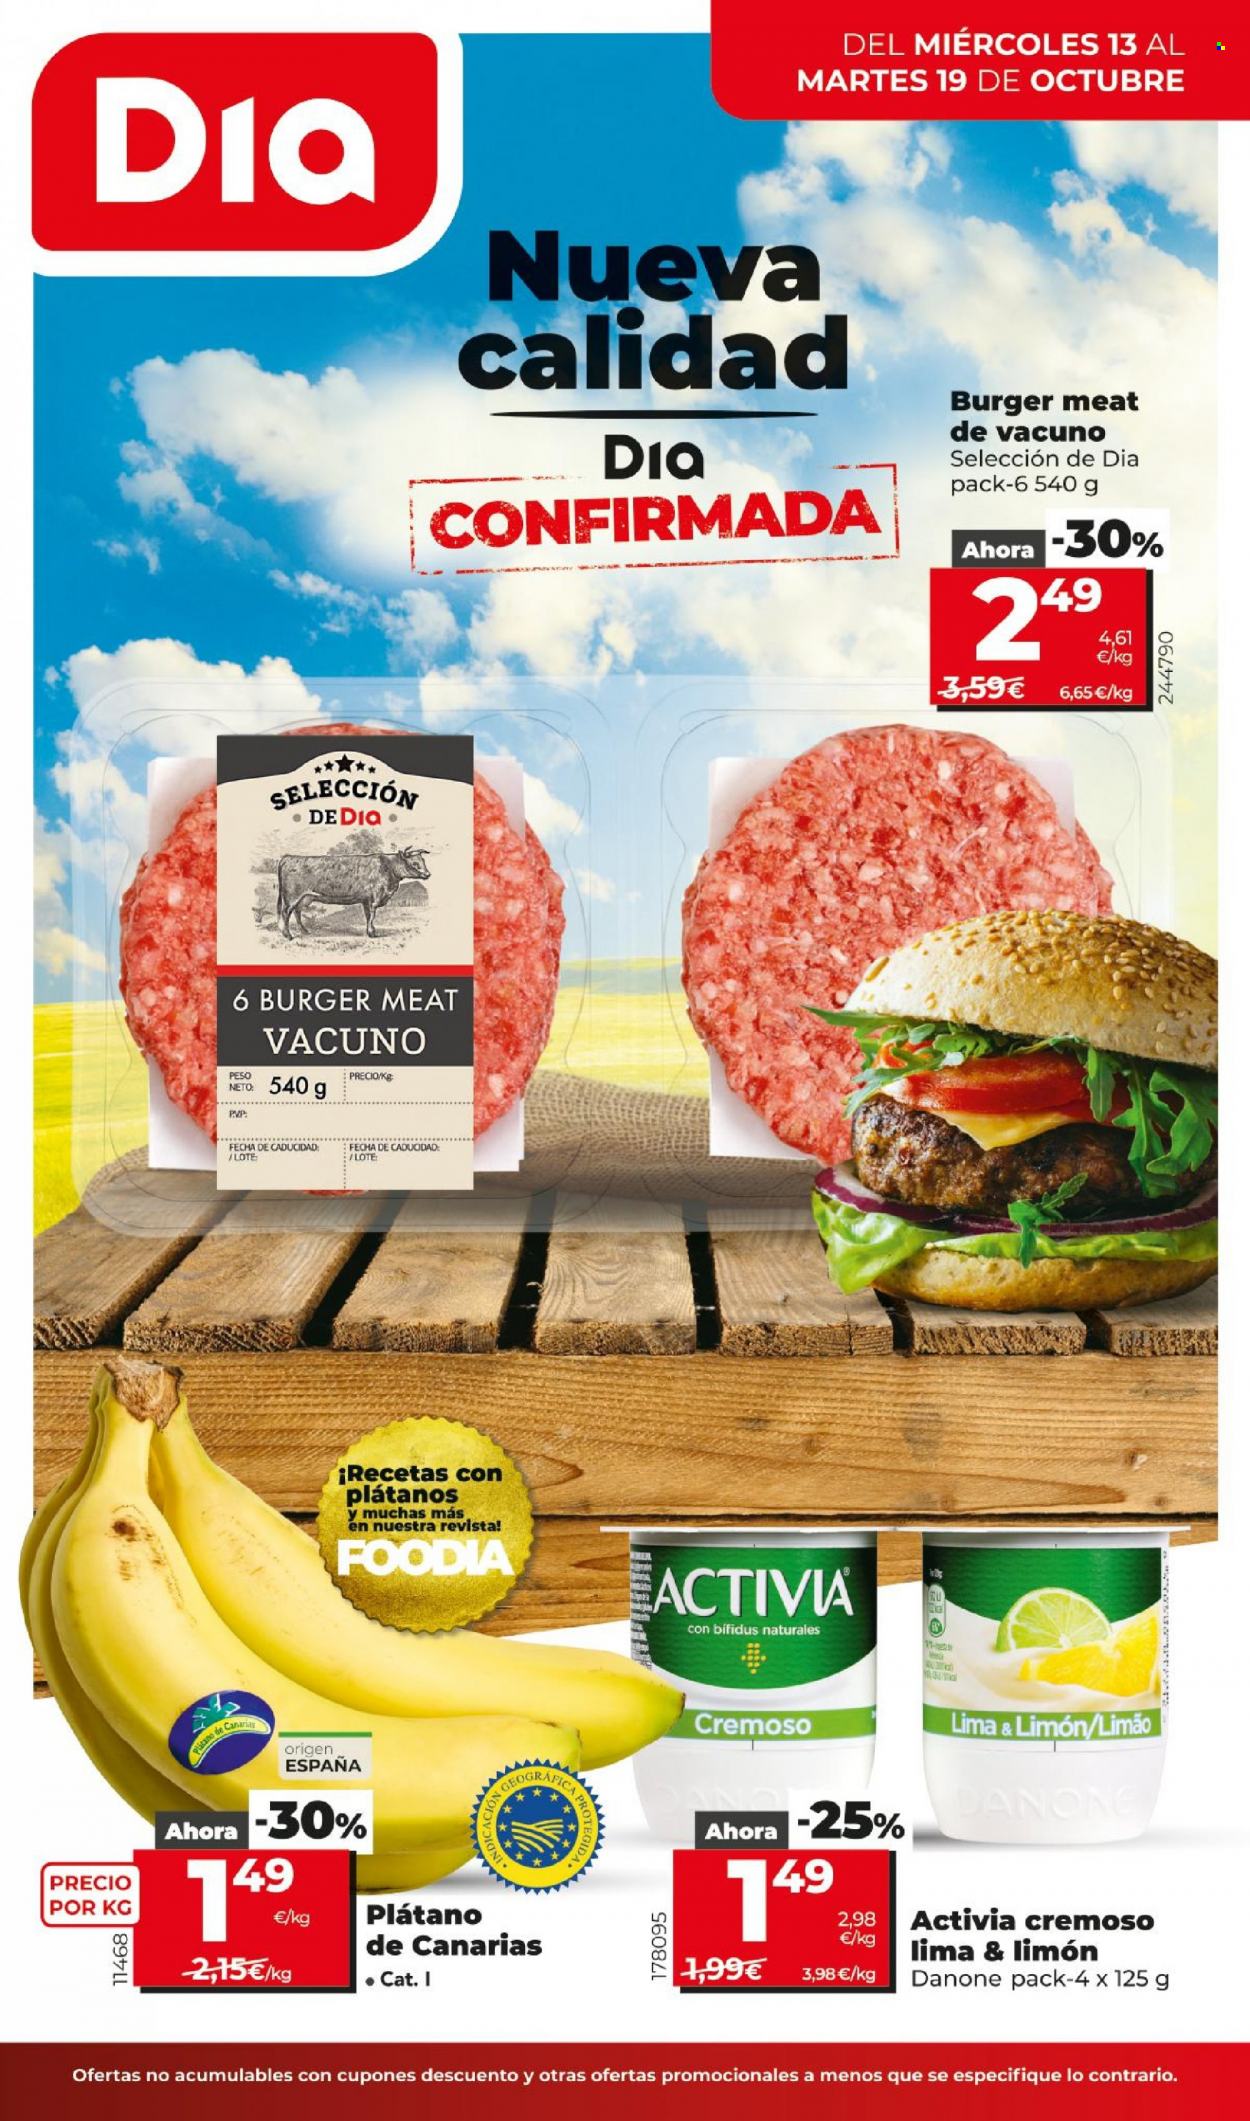 thumbnail - Folleto actual Dia - 13/10/21 - 19/10/21 - Ventas - hamburguesa, carne picada, Danone, Activia. Página 1.